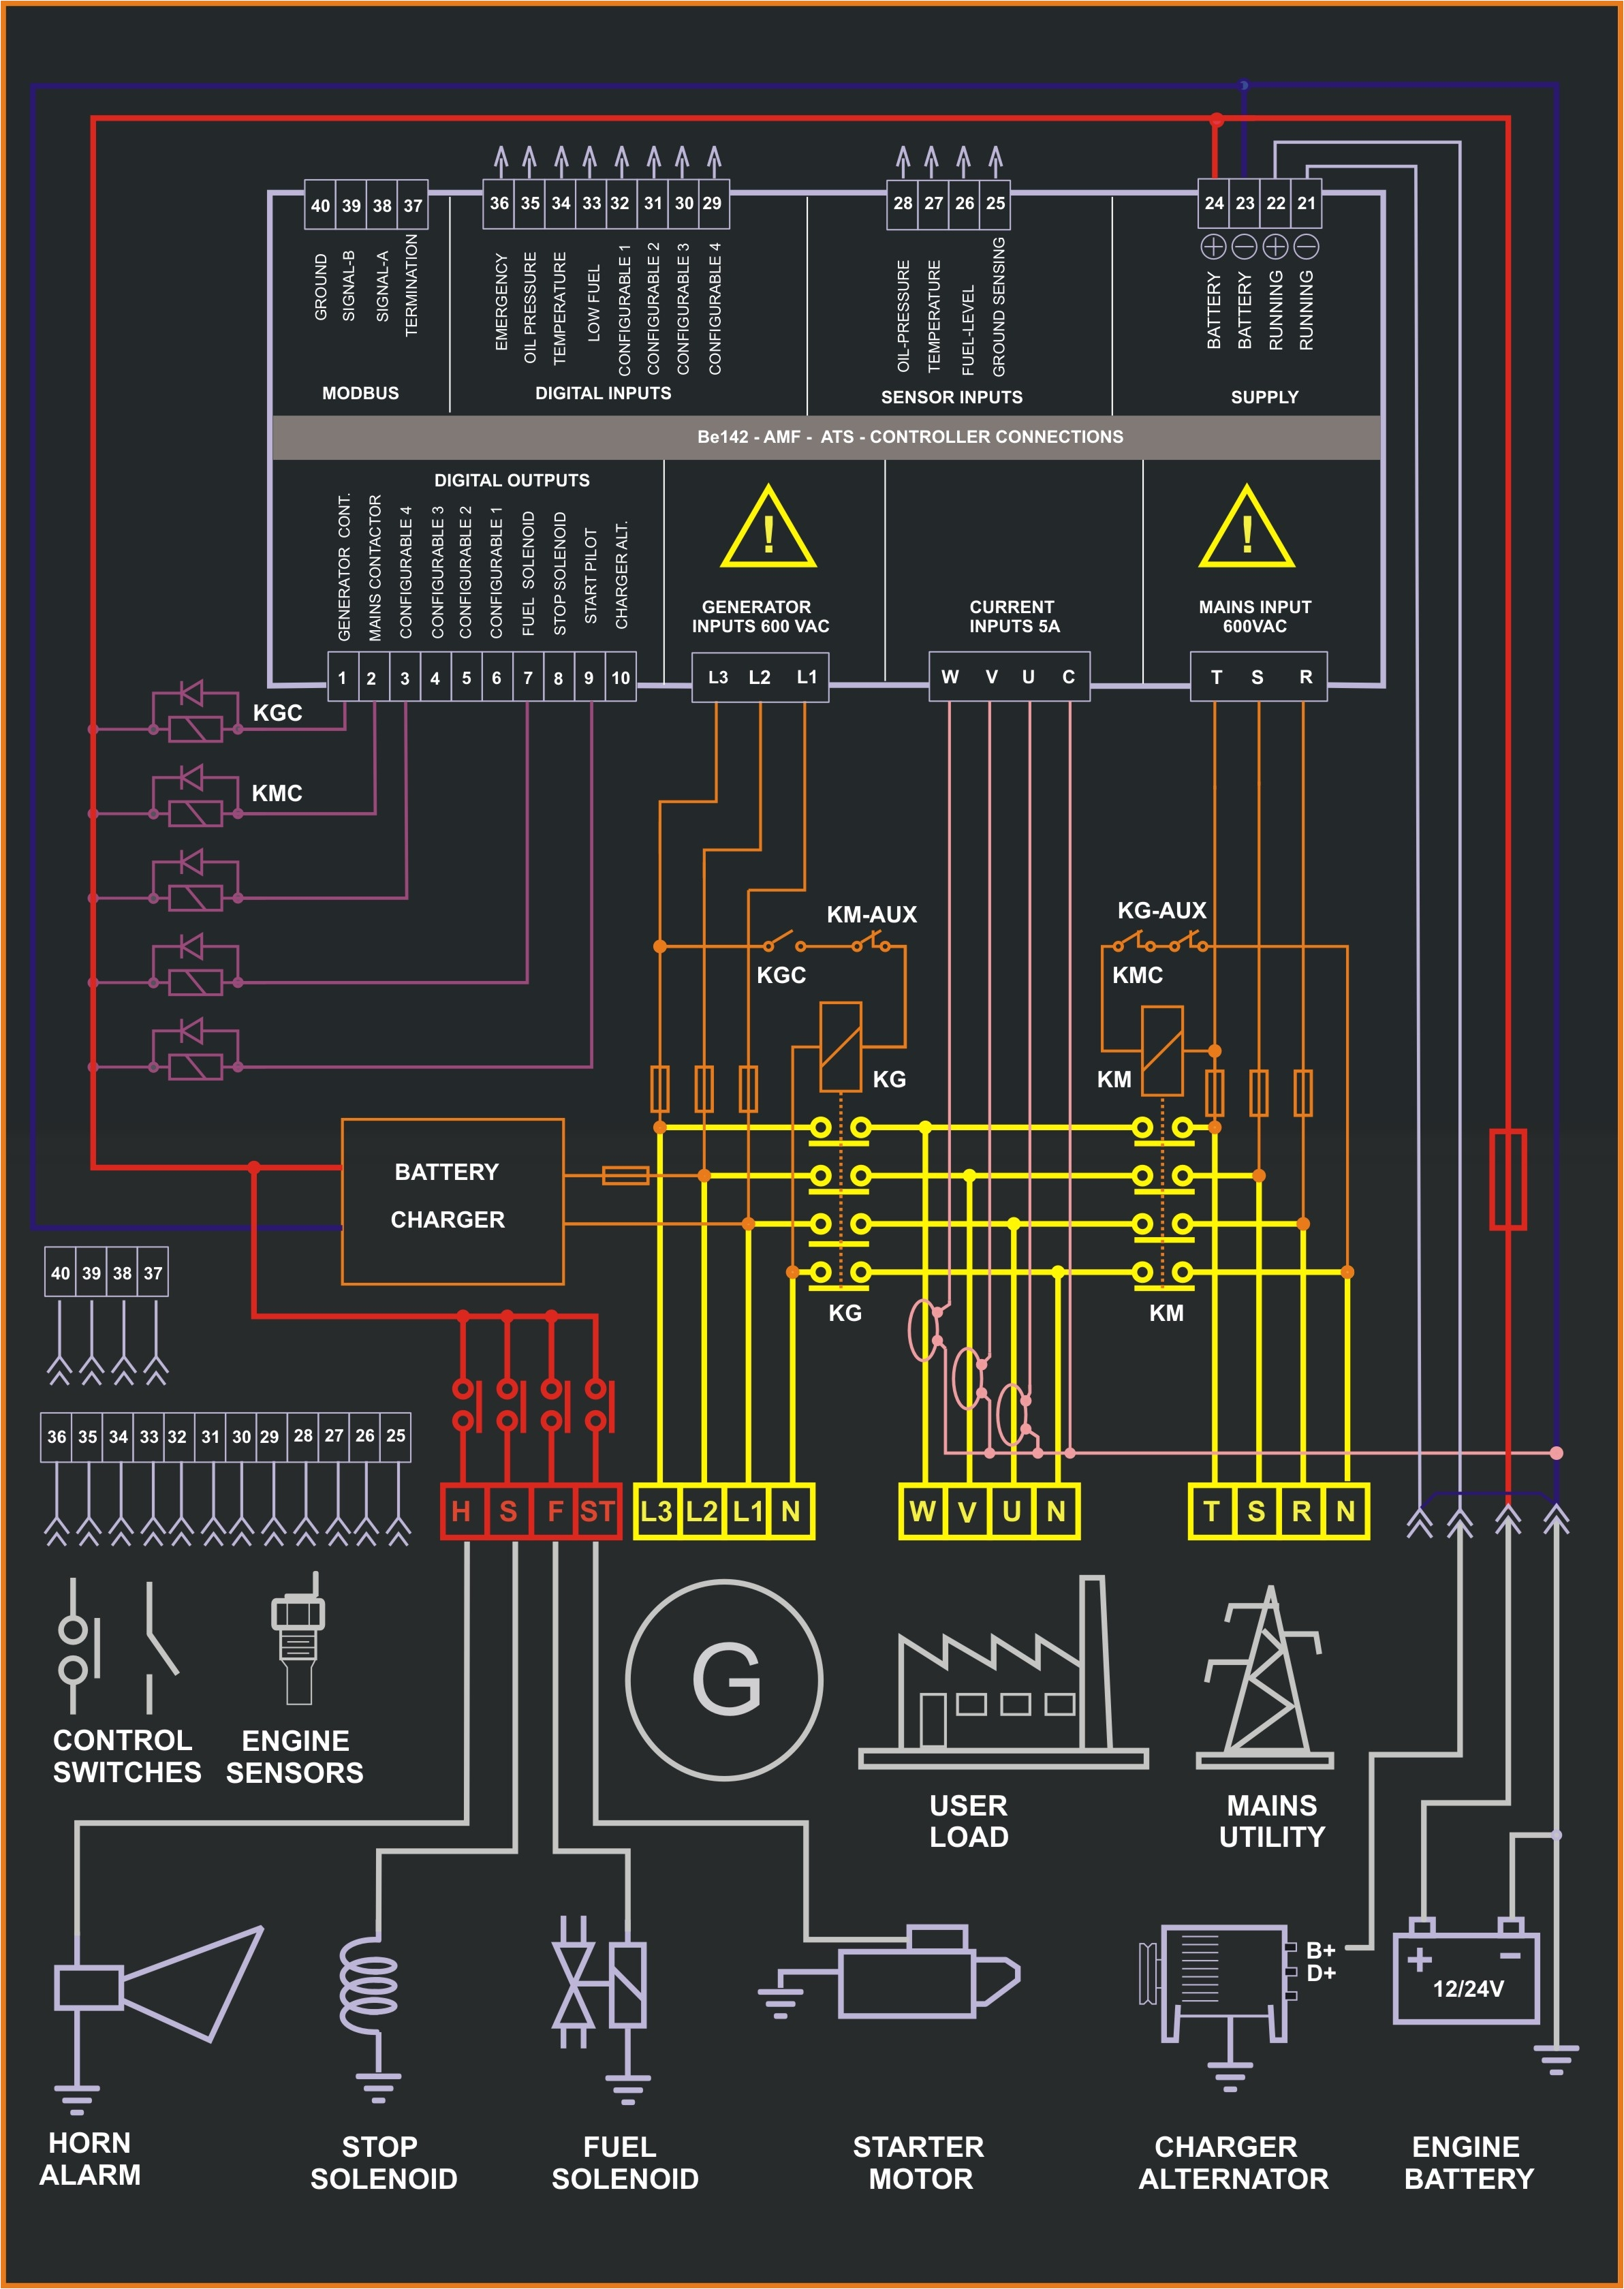 generator control panel wiring diagram home wiring diagram fg wilson generator control panel wiring diagram generator control panel wiring diagram